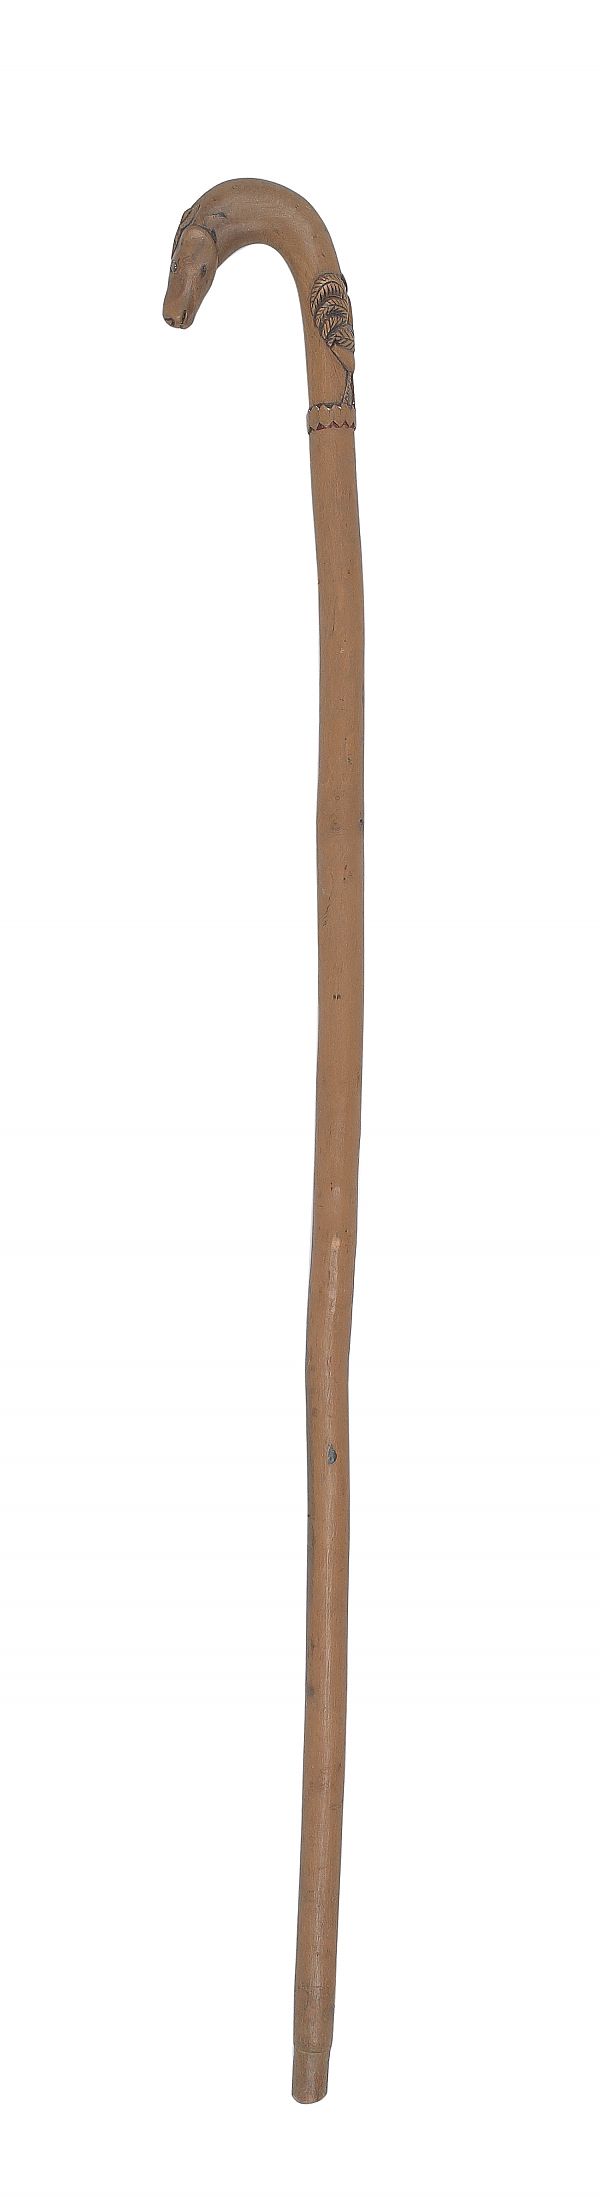 Pennsylvania carved walking stick 1750ef